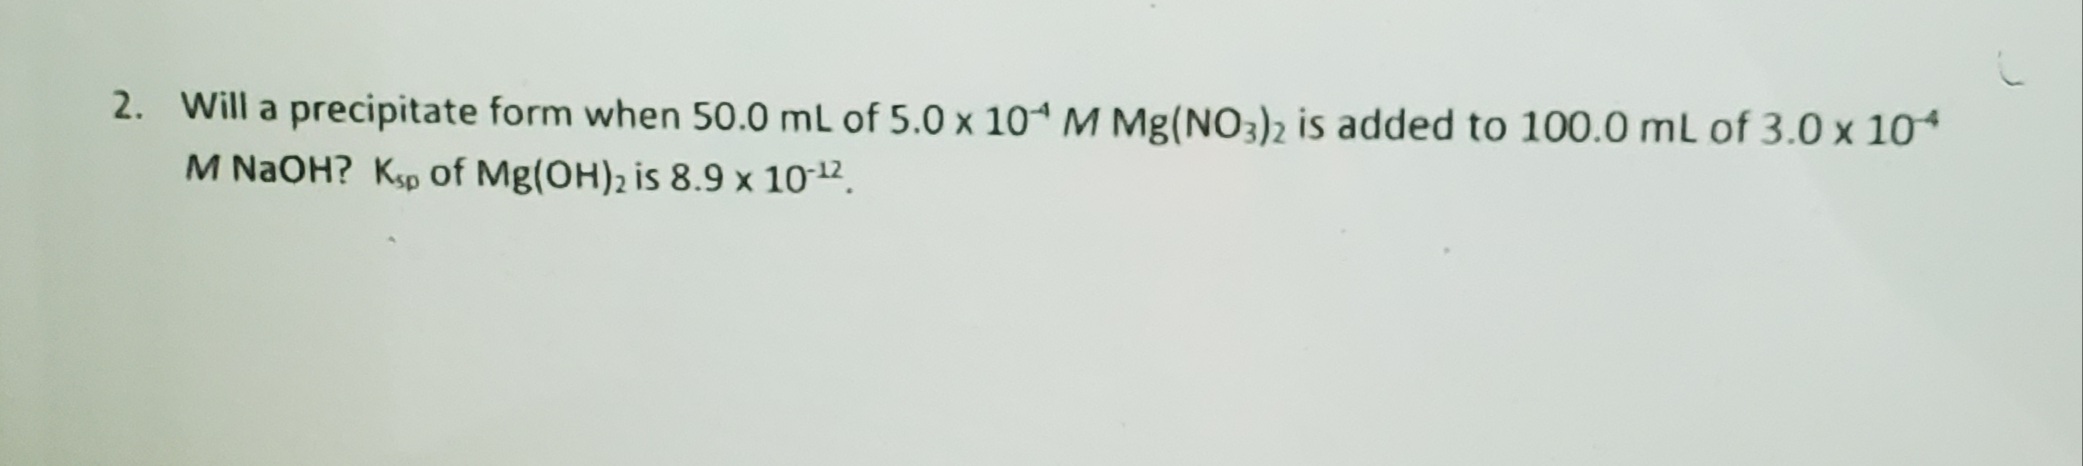 Will a precipitate form when 50.0 mL of 5.0 x 10ª M Mg(NO3)2 is added to 100.0 mL of 3.0 x 10*
M NAOH? Ksp of Mg(OH), is 8.9 x 1012.
